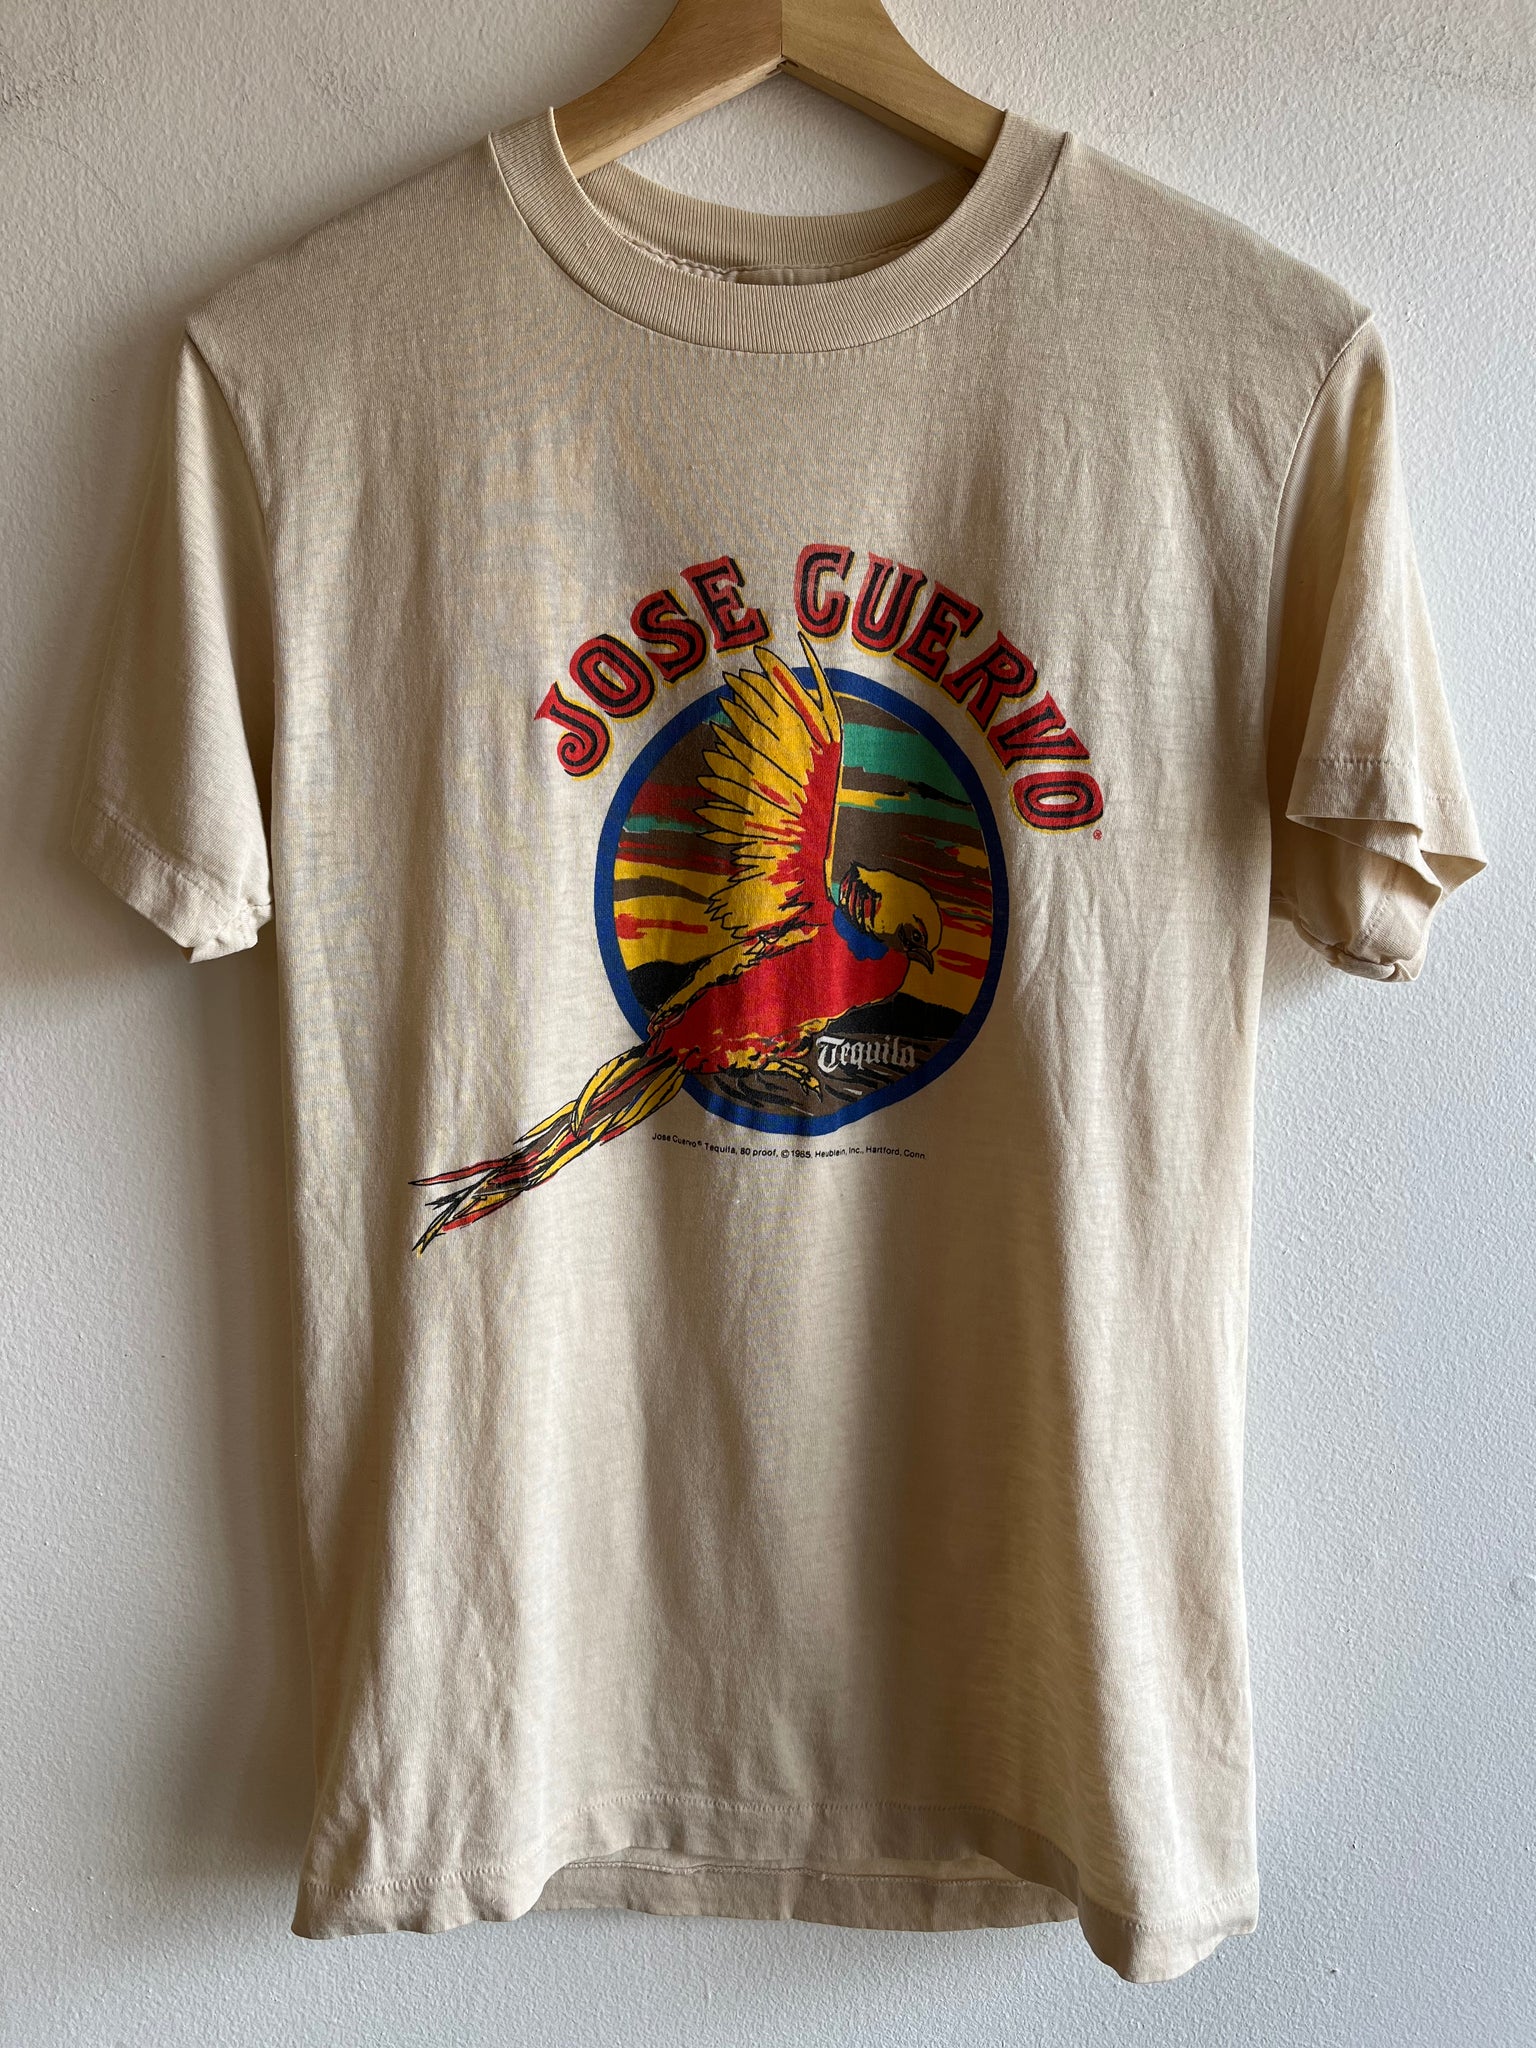 Vintage 1980’s Jose Cuervo T-Shirt